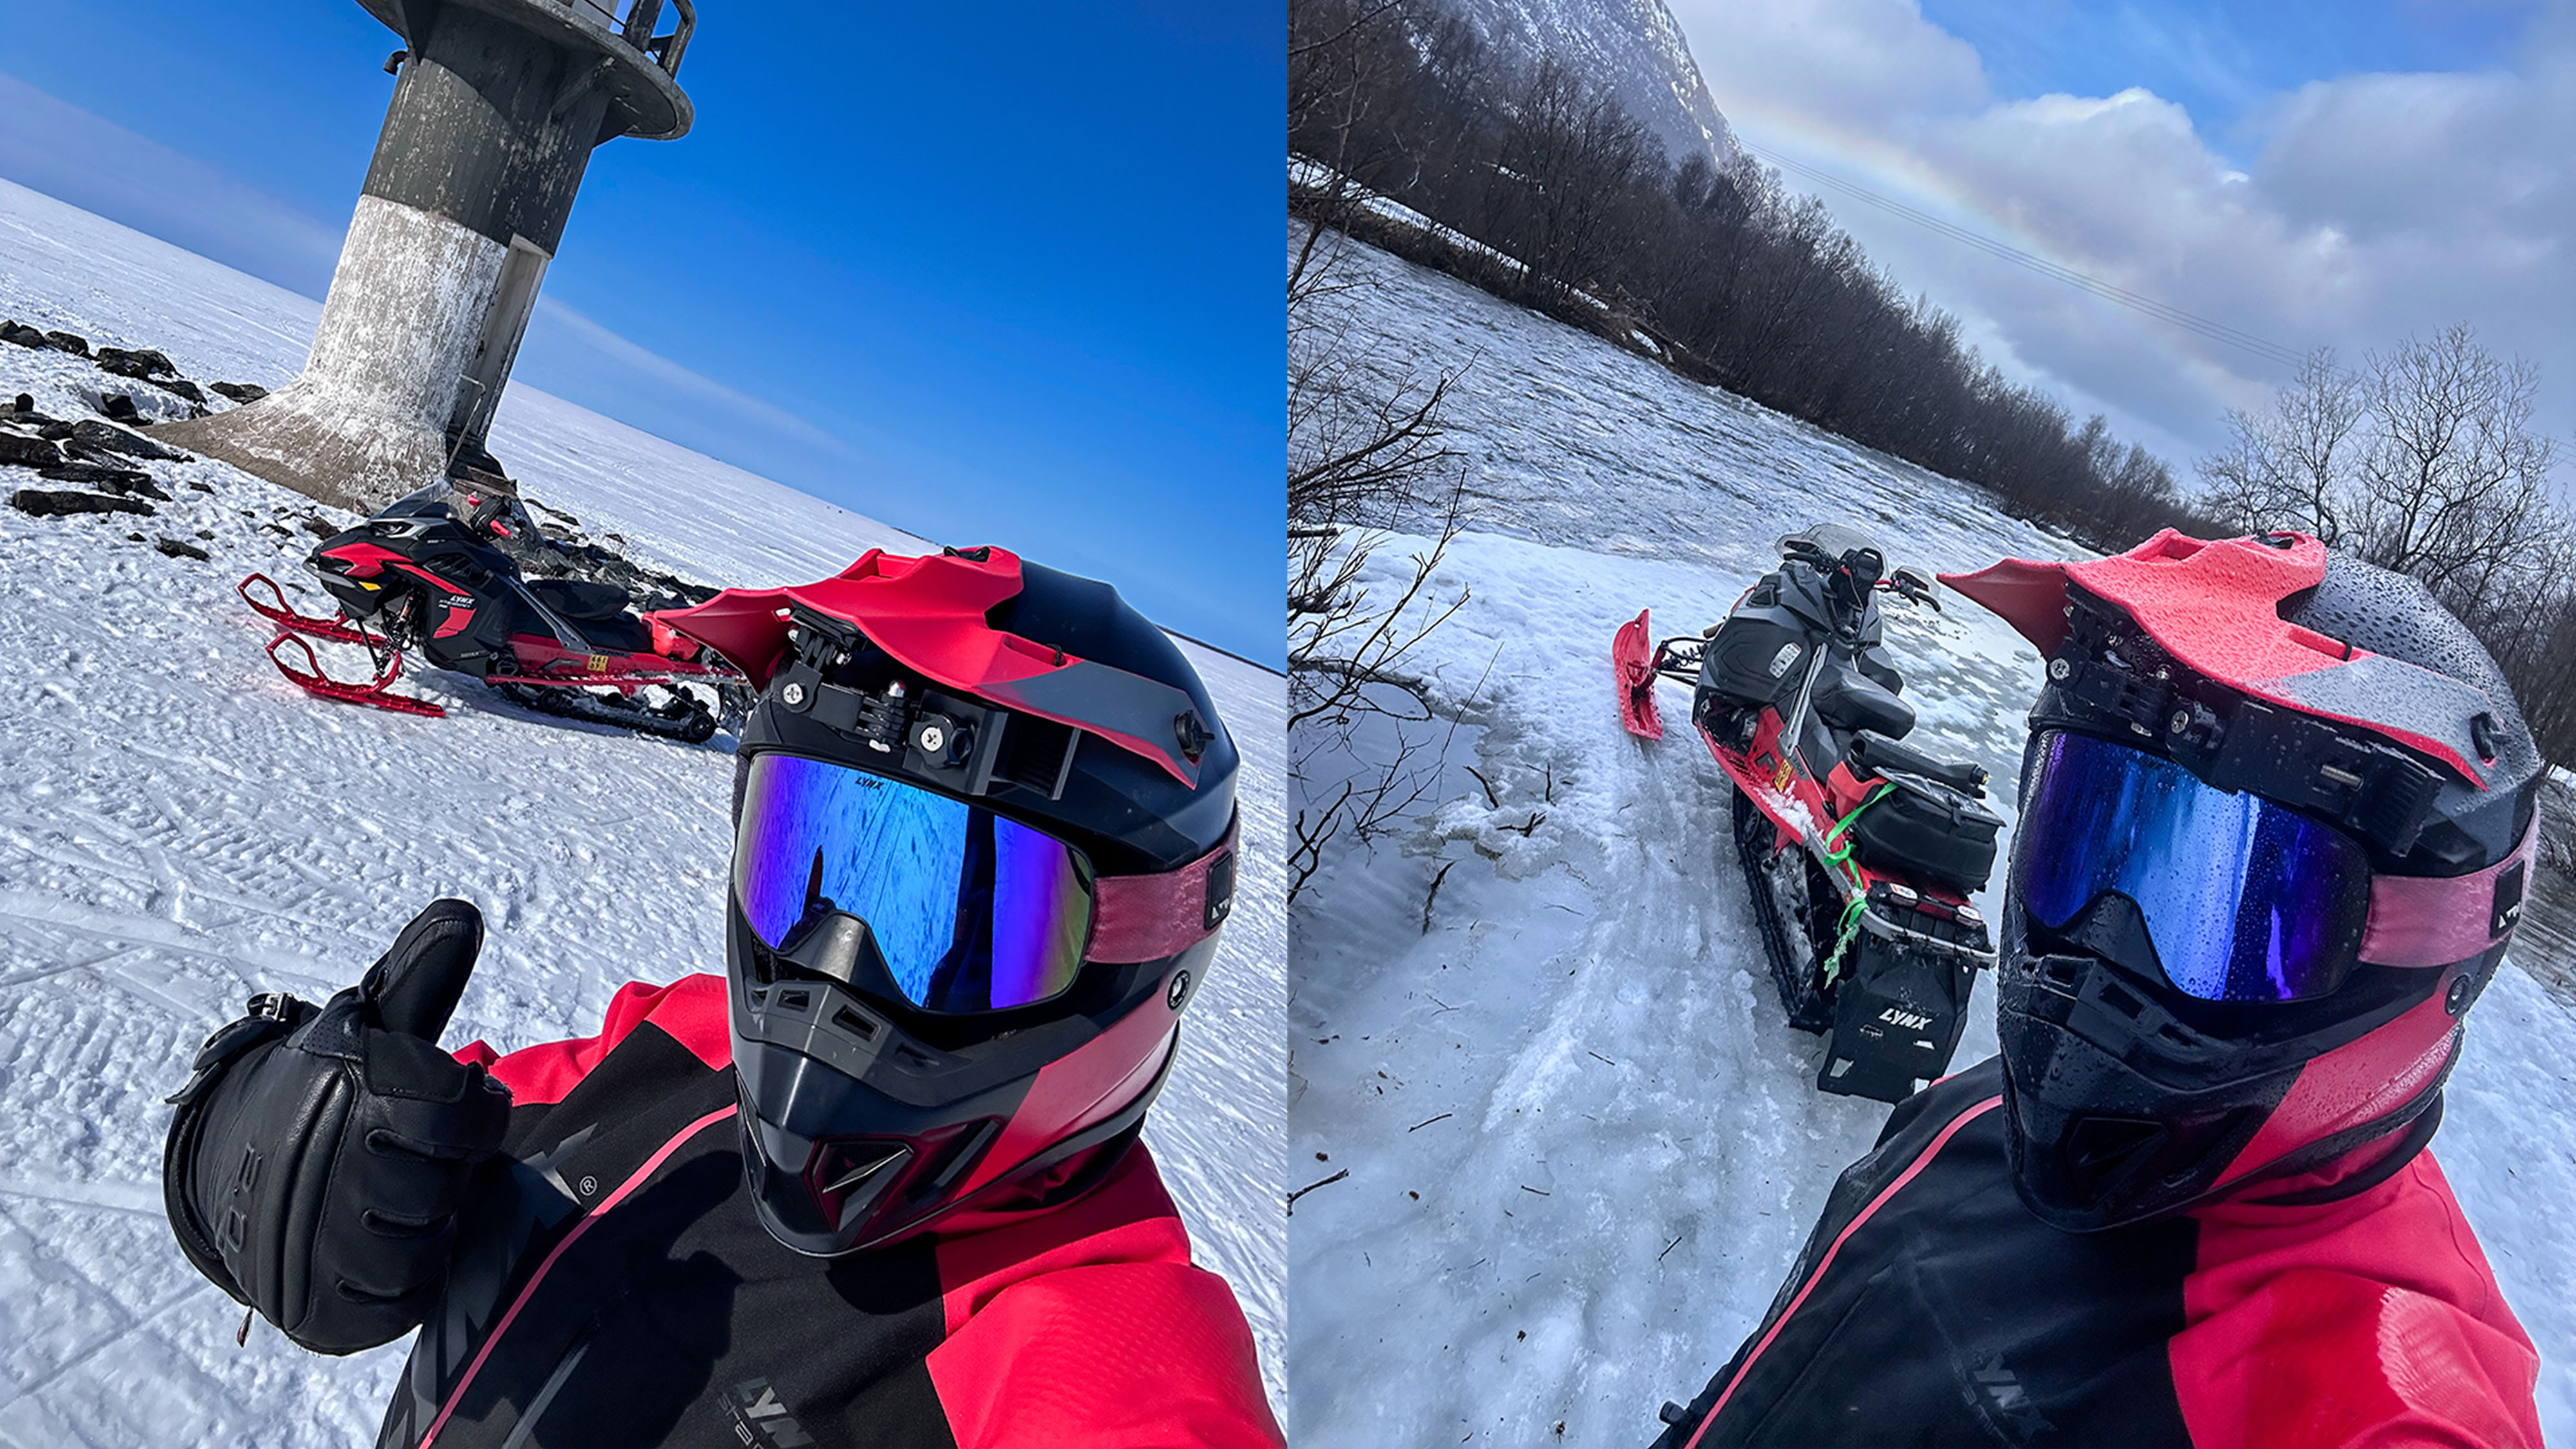 Lynx ambassador Joni Maununen taking more selfies with an Xterrain RE 850 E-TEC crossover snowmobile